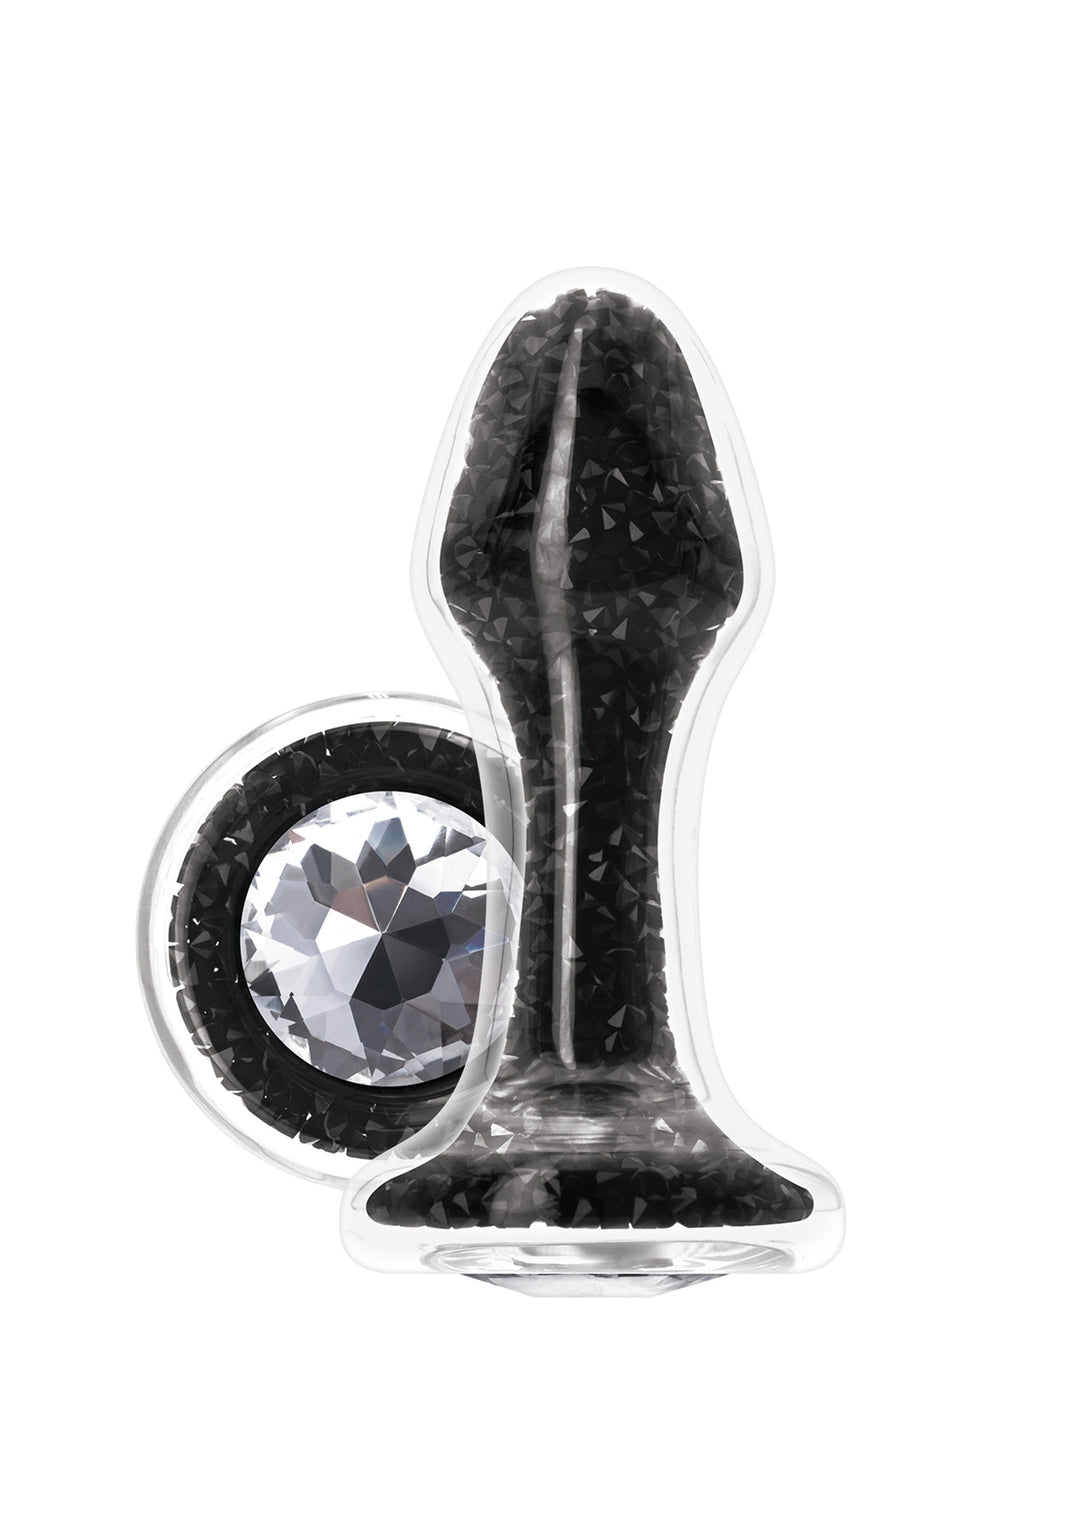 Glass anal plug with Stardust glam stone